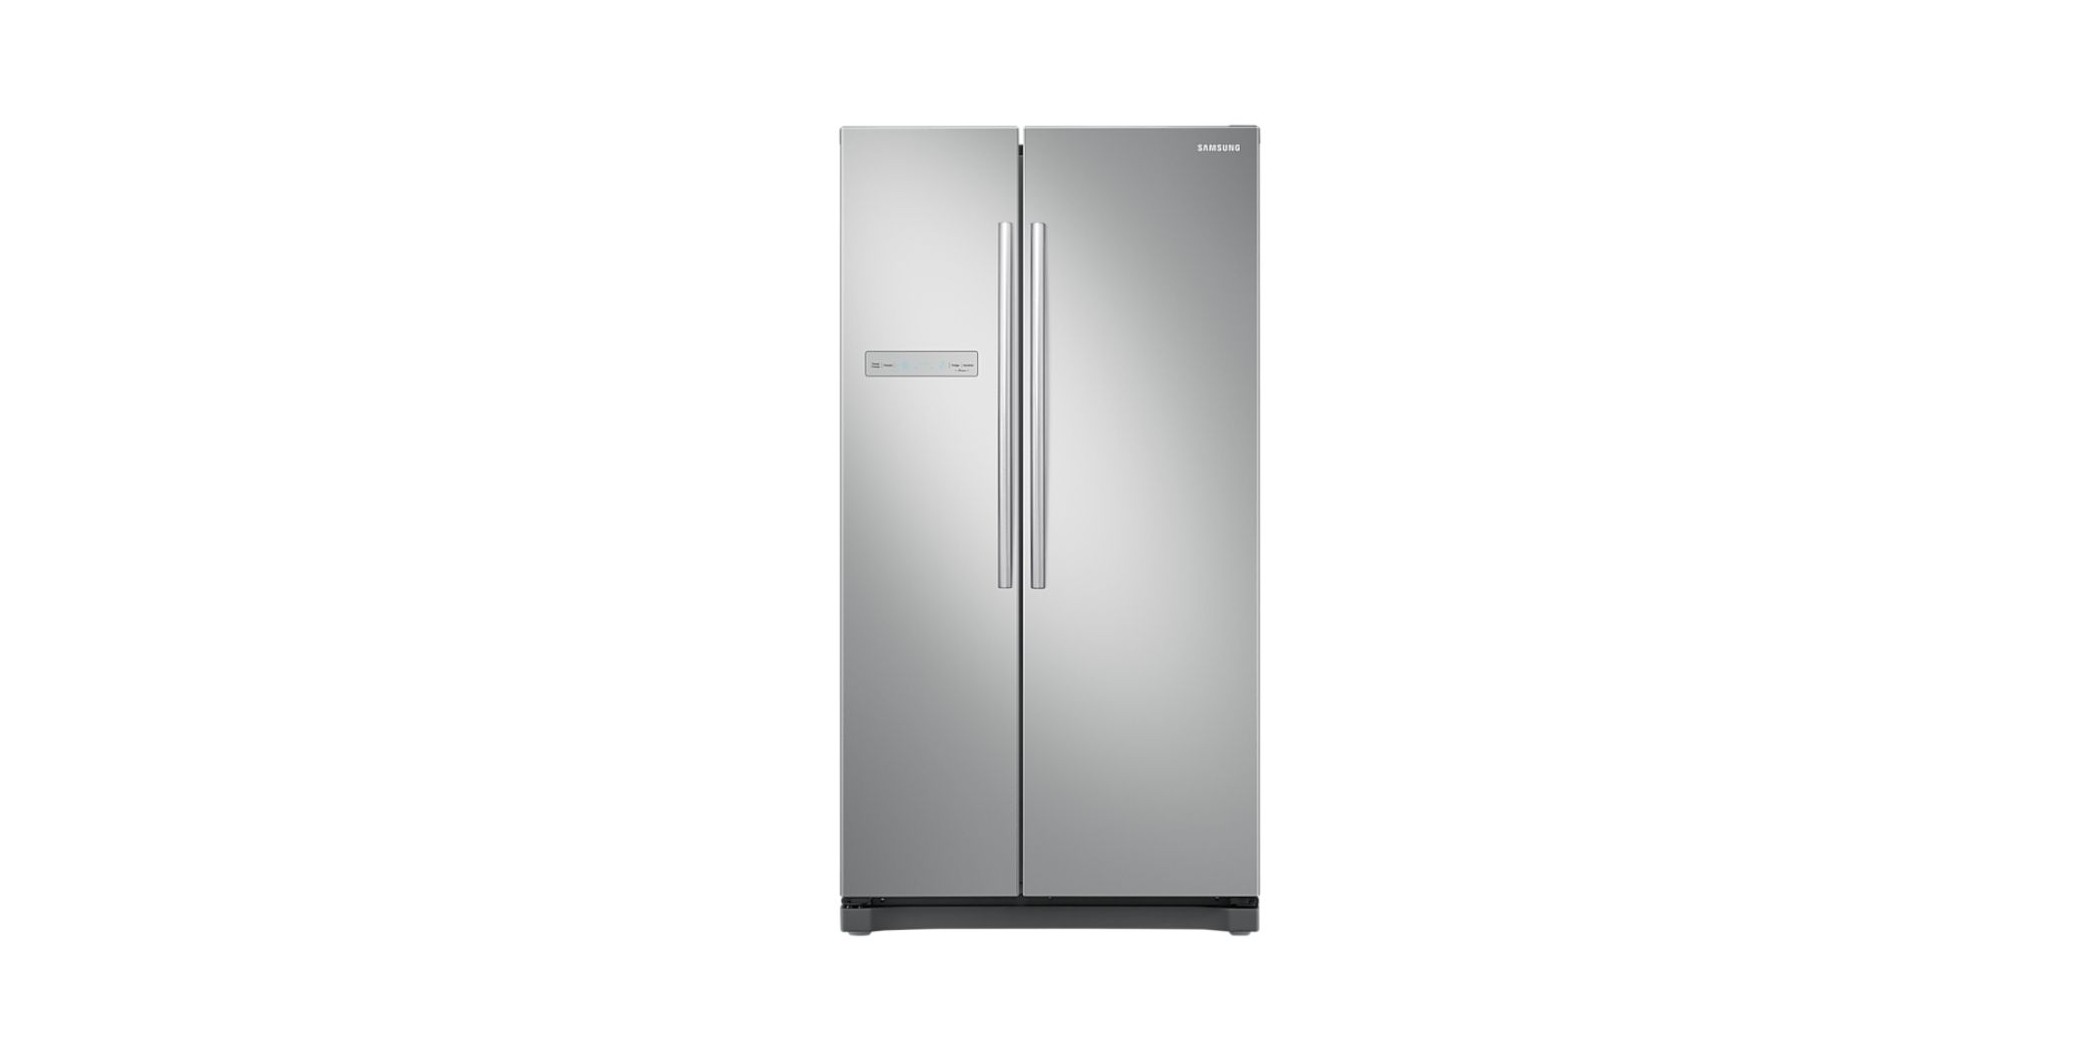 Samsung RS54N3003SA Refrigerator